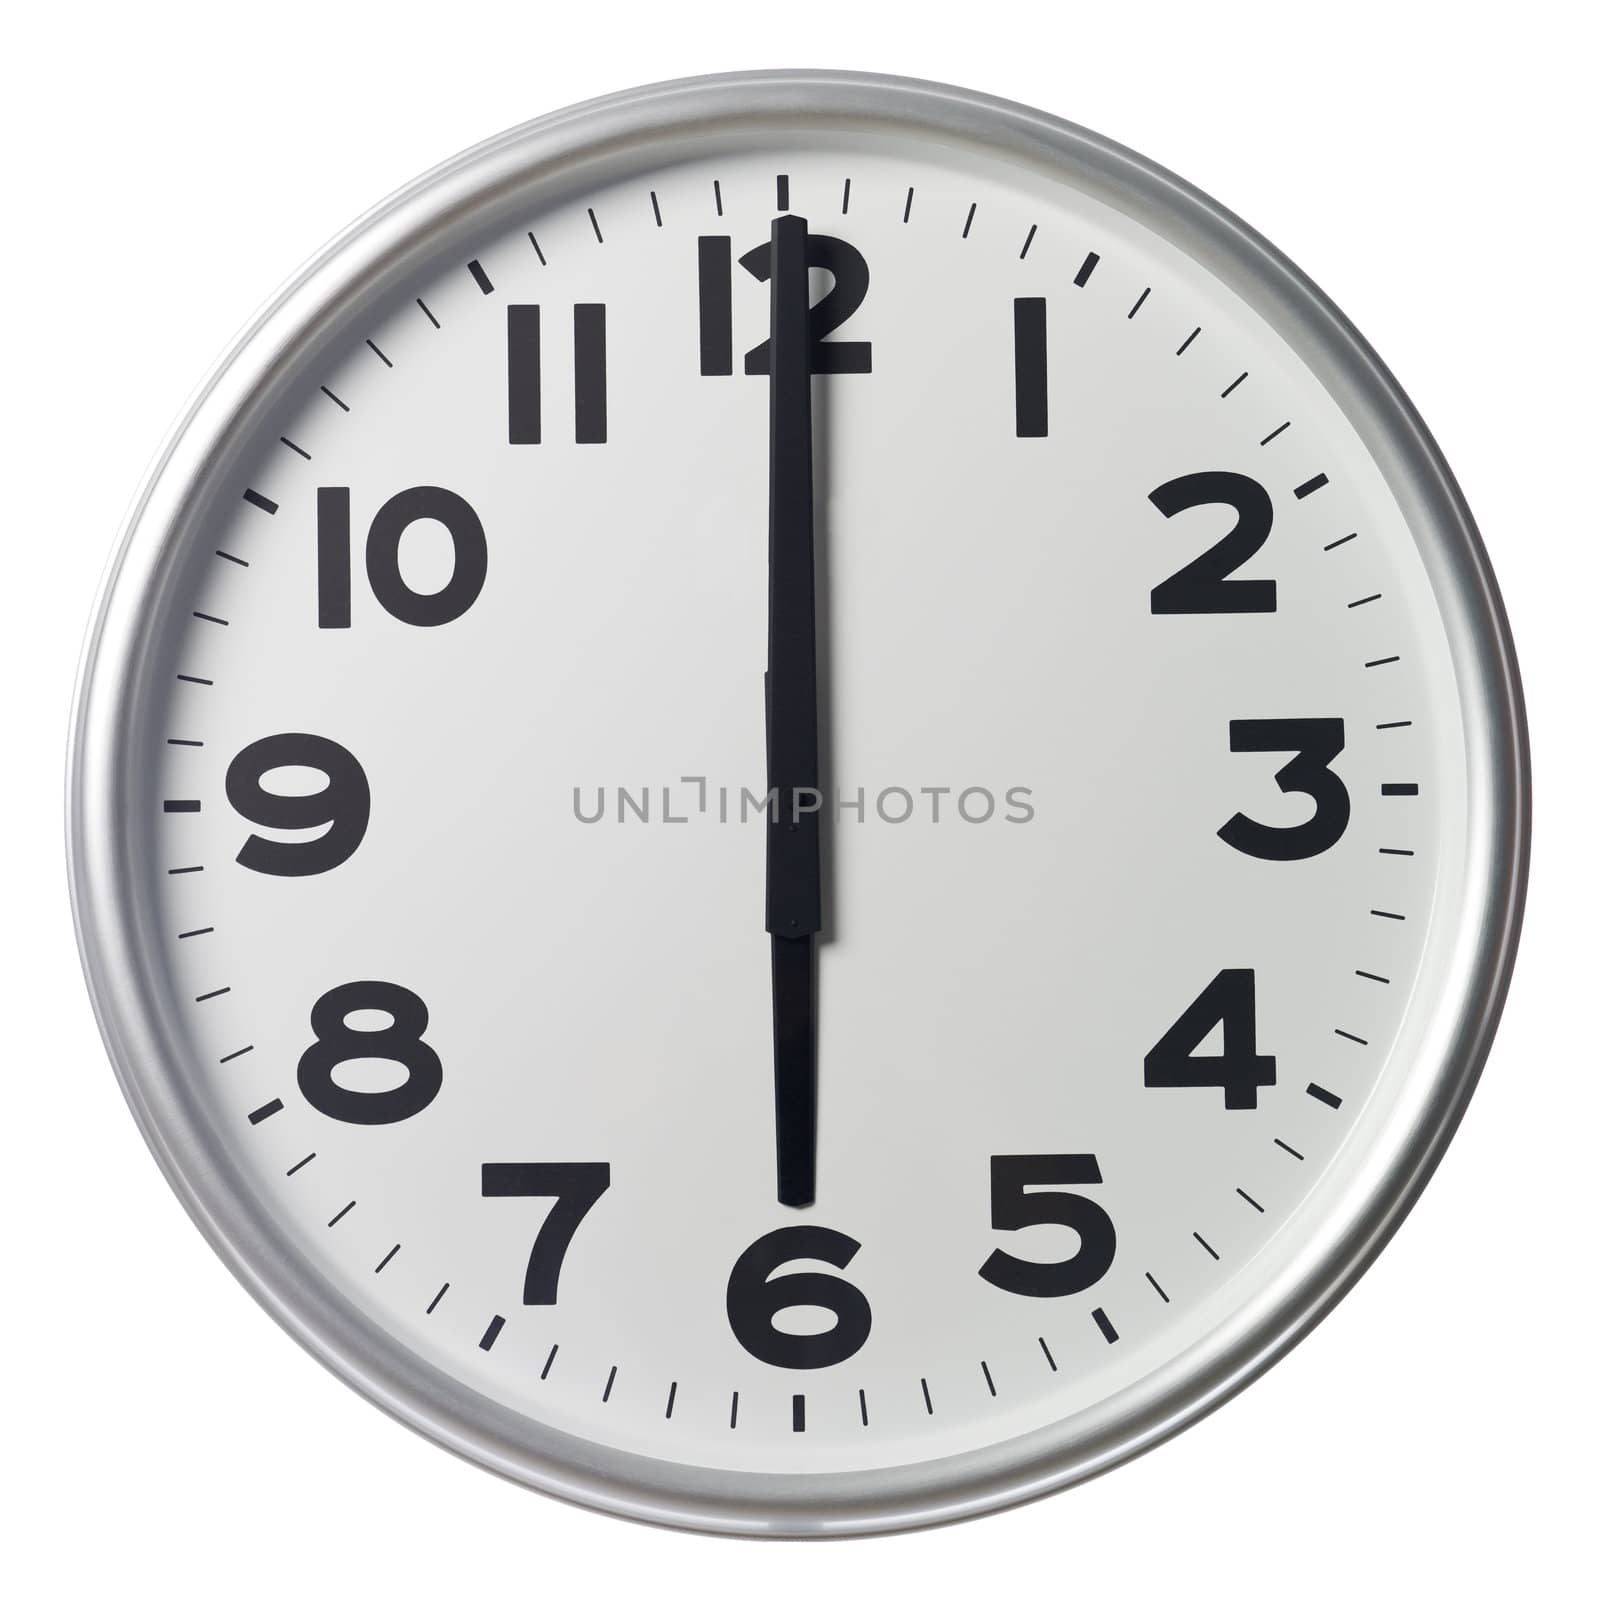 Six O'Clock by gemenacom